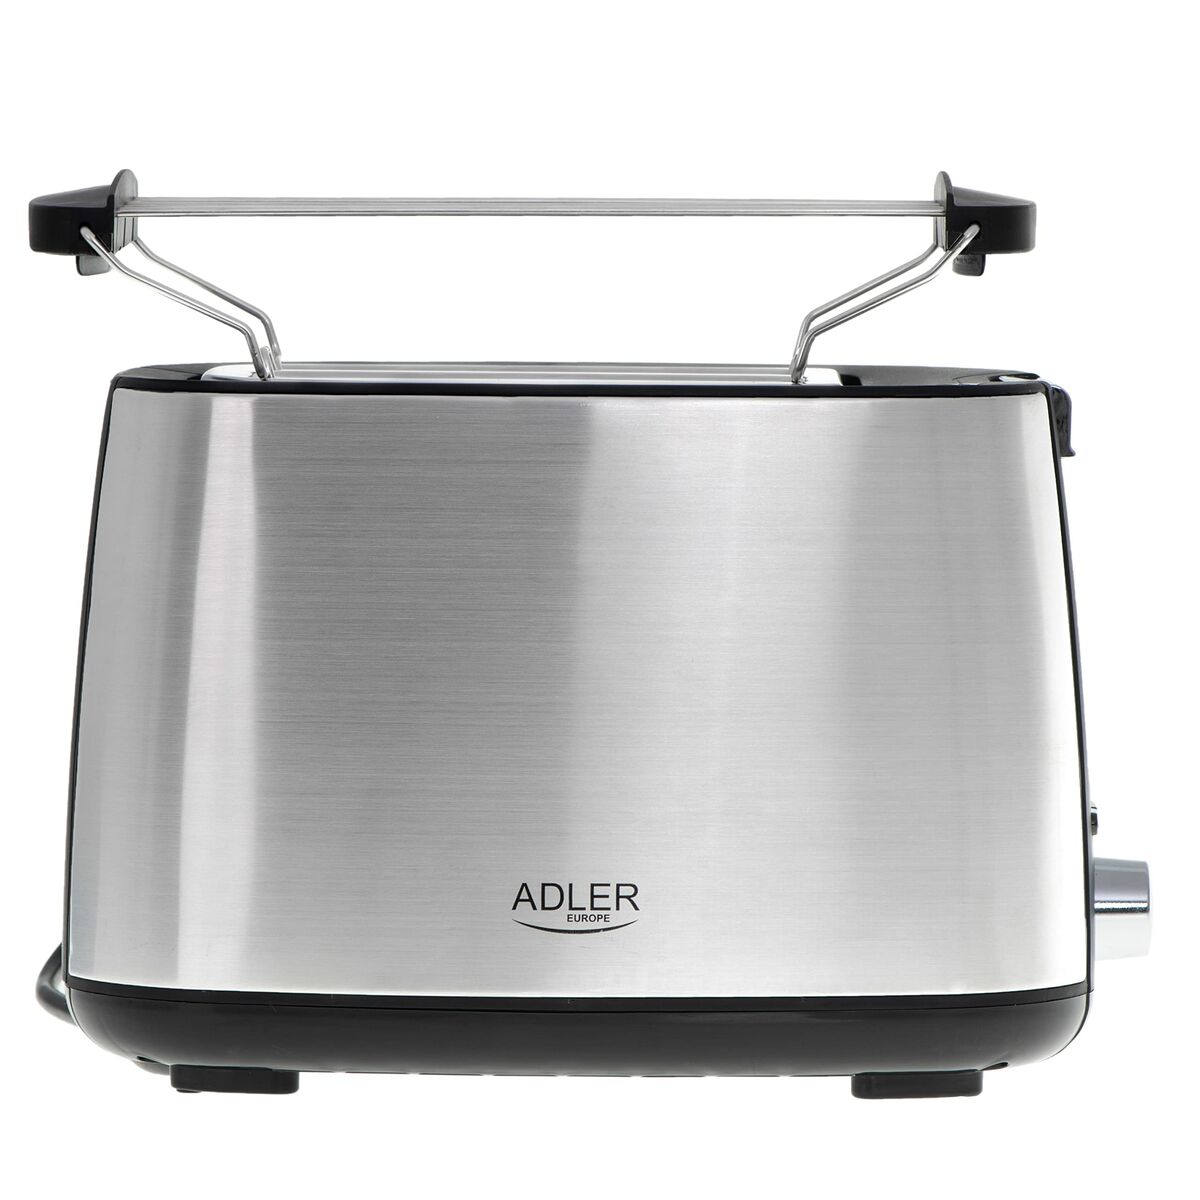 Toaster Adler AD 3214 900 W 650 W - CA International 